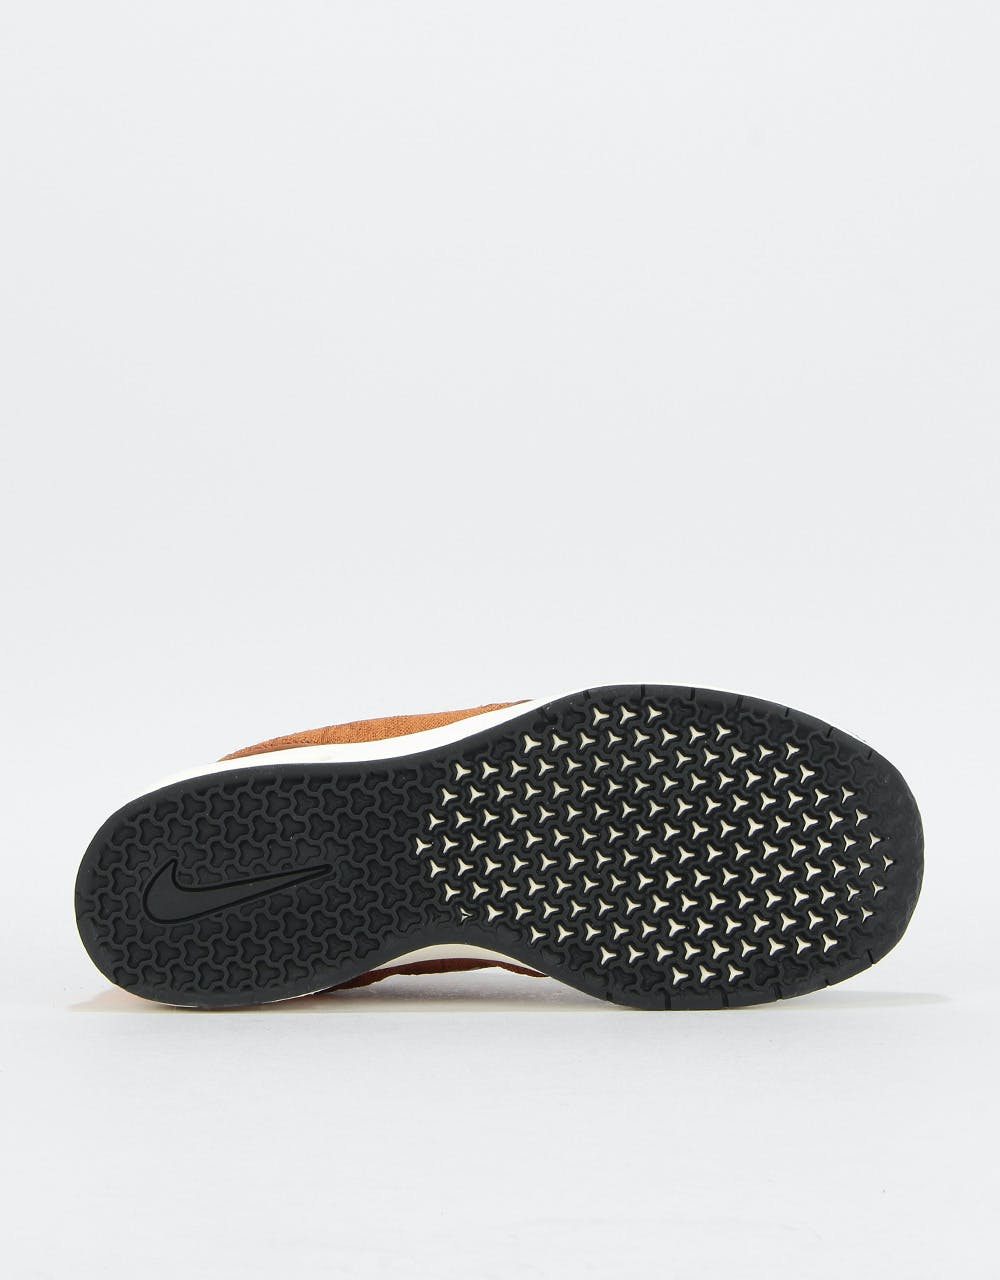 Nike SB Air Max Janoski 2 Skate Shoes - Geode Teal/Pale Ivory-Tan